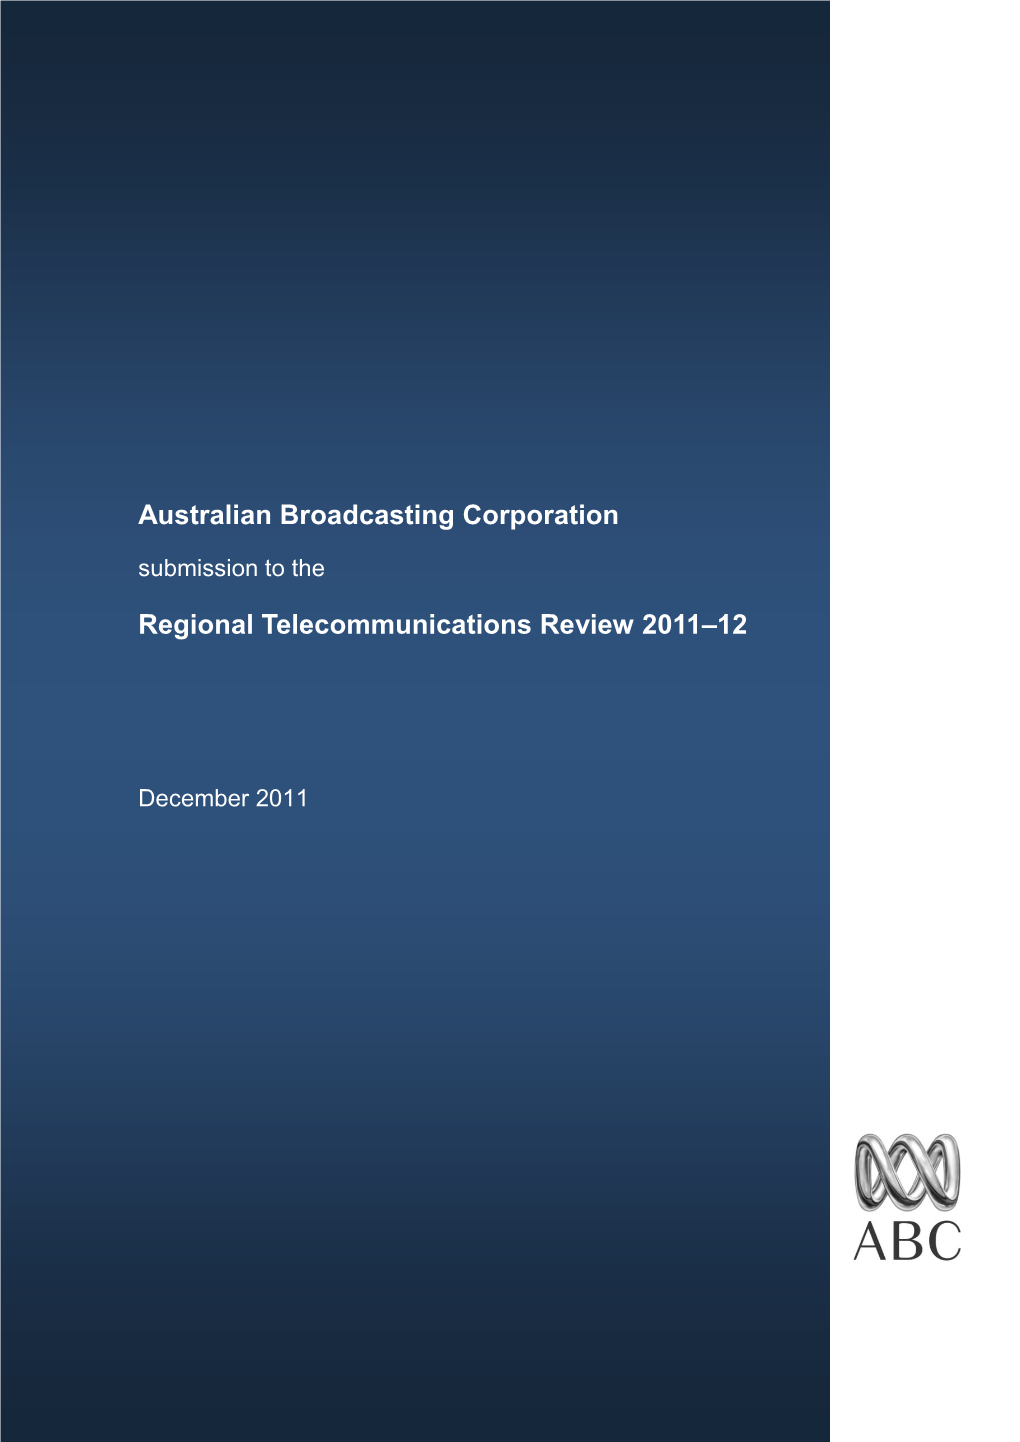 Australian Broadcasting Corporation Regional